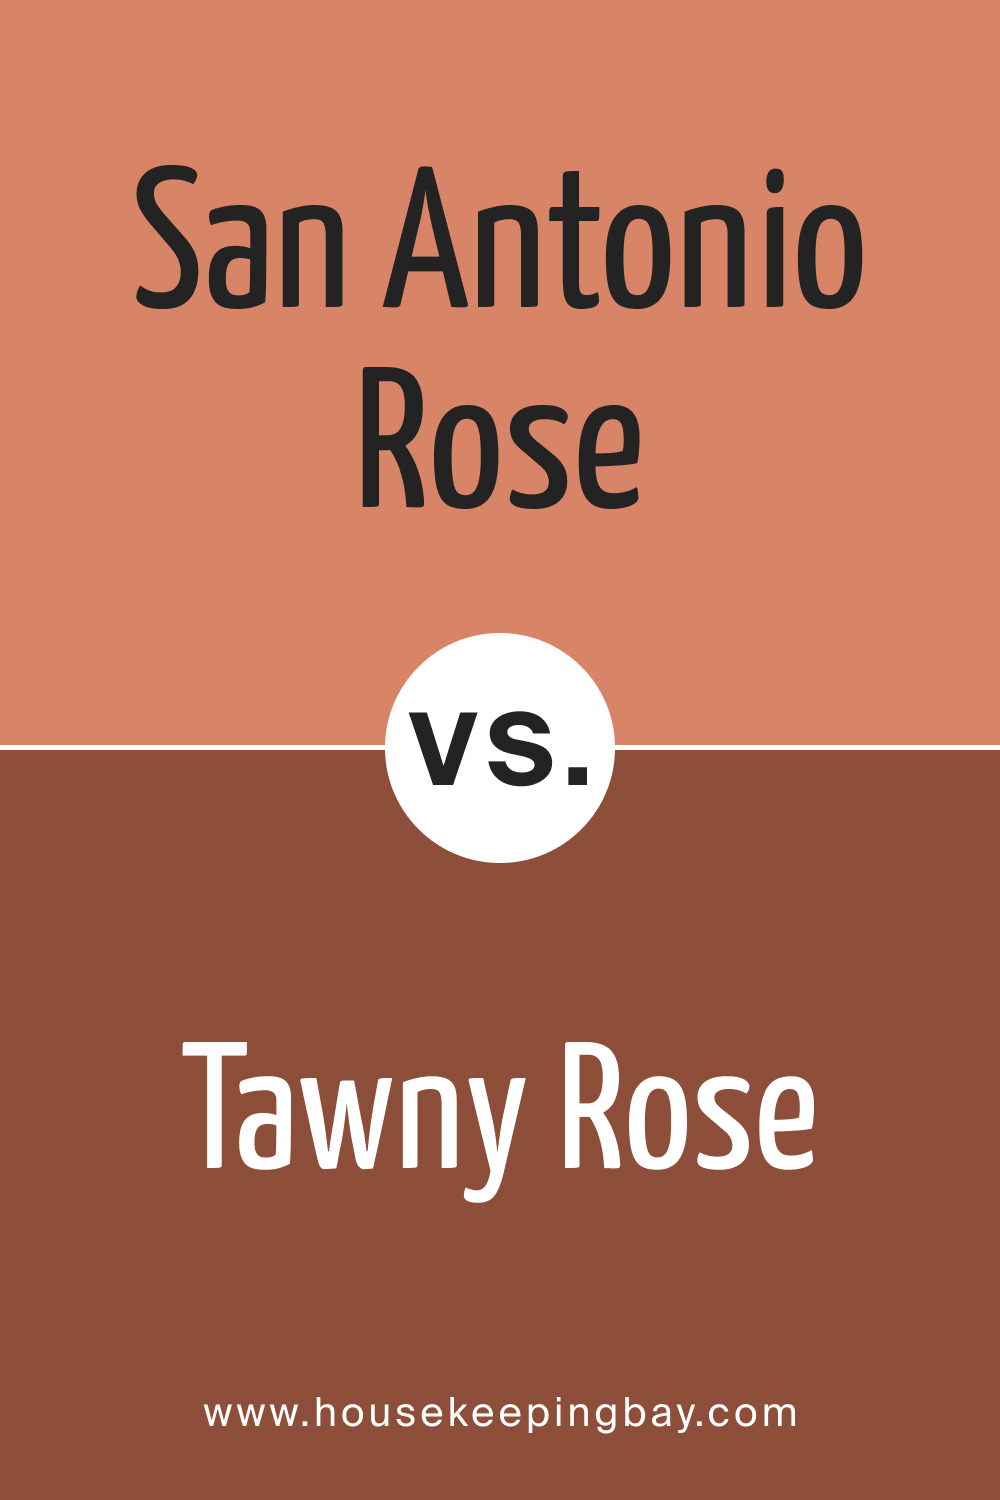 San Antonio Rose 027 vs. BM 2173 20 Tawny Rose